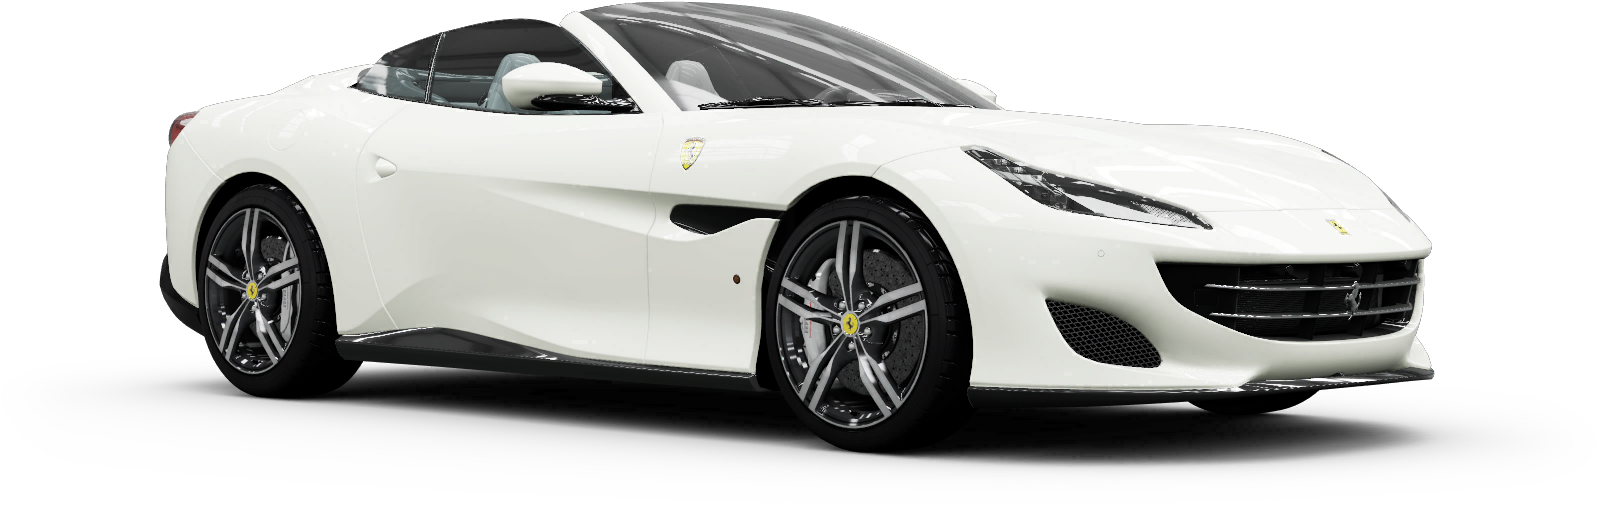 White Ferrari Convertible Side View PNG